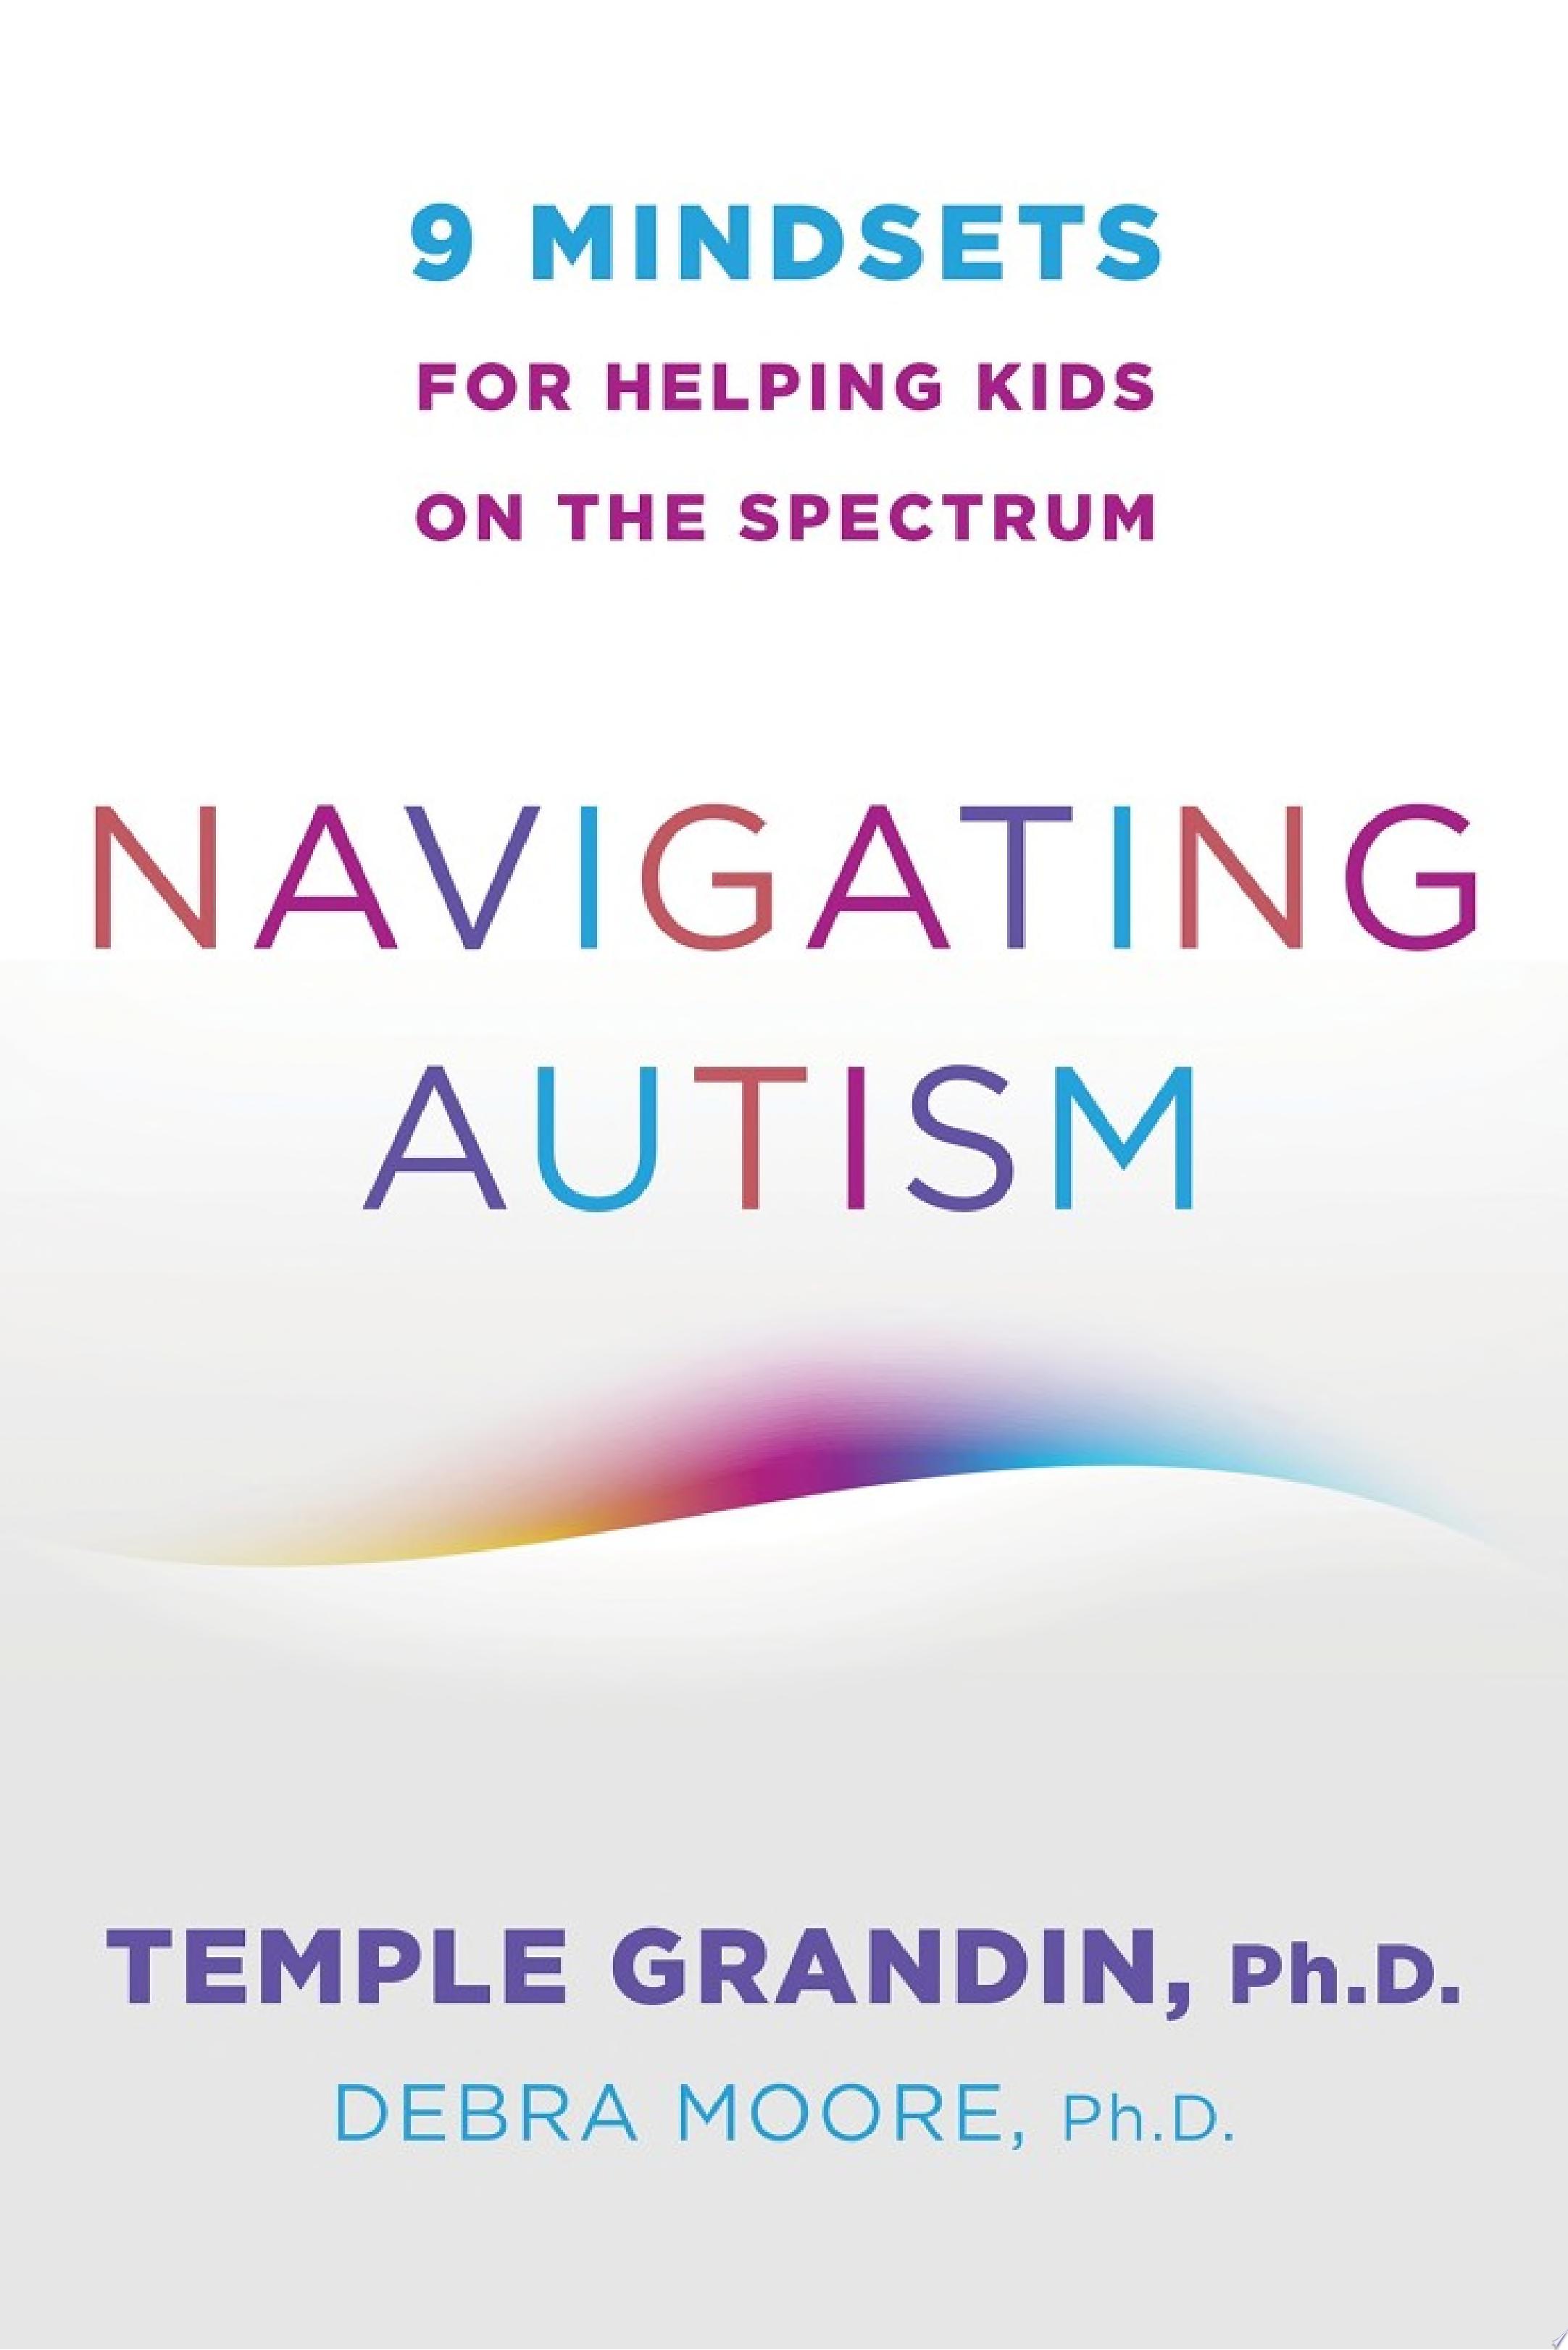 Image for "Navigating Autism: 9 Mindsets For Helping Kids on the Spectrum"